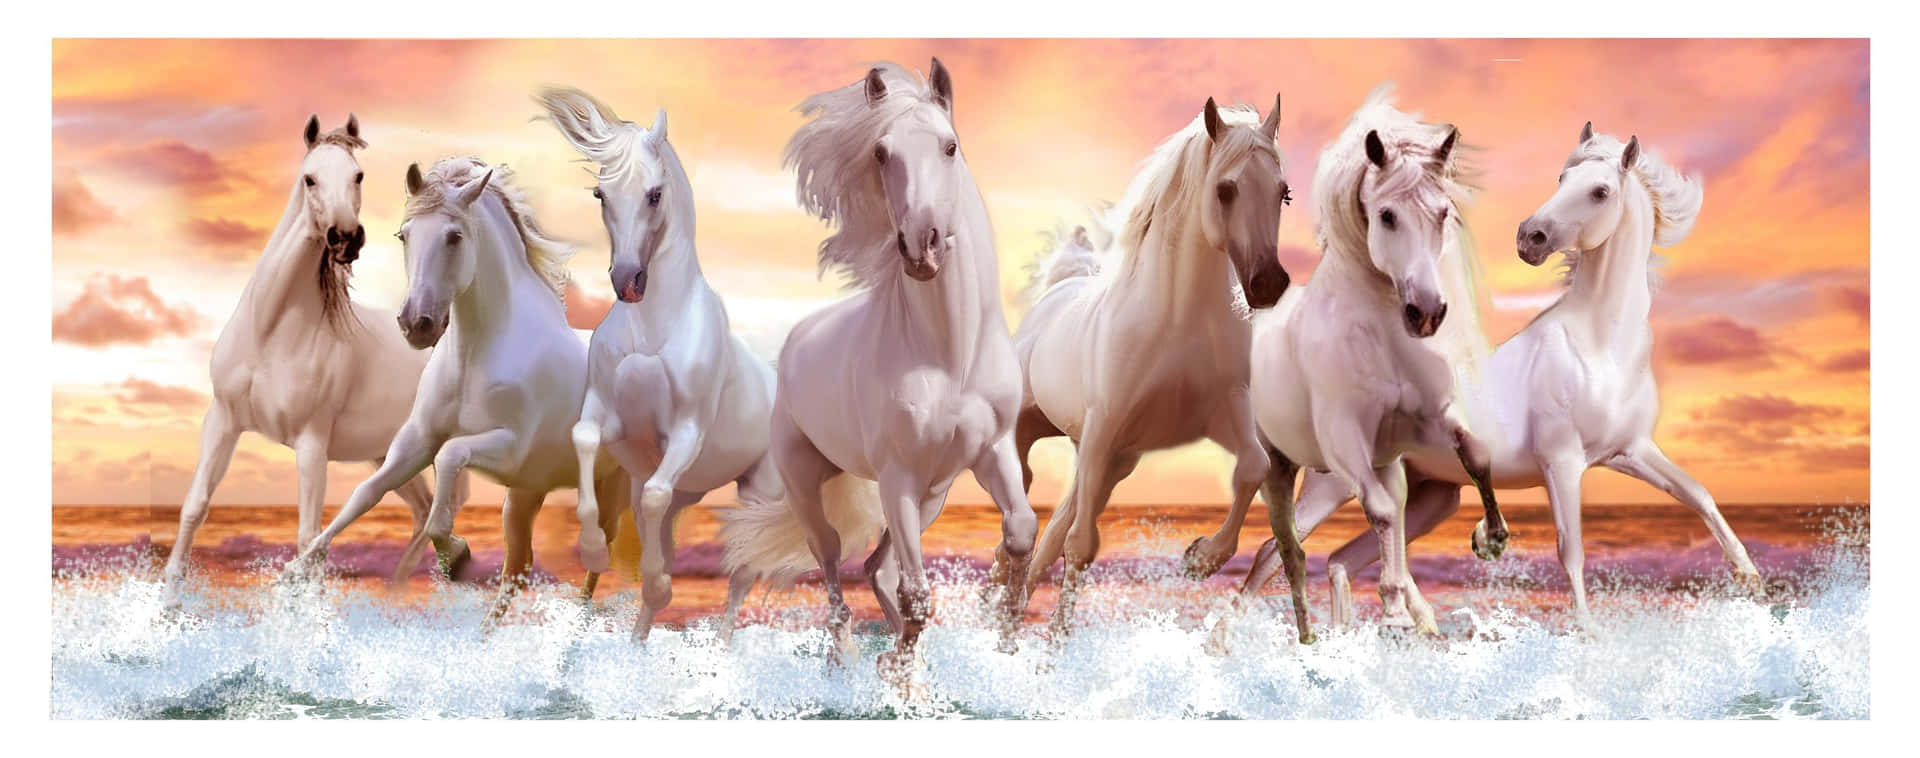 Download 7 White Horses On Sea Shore Wallpaper 